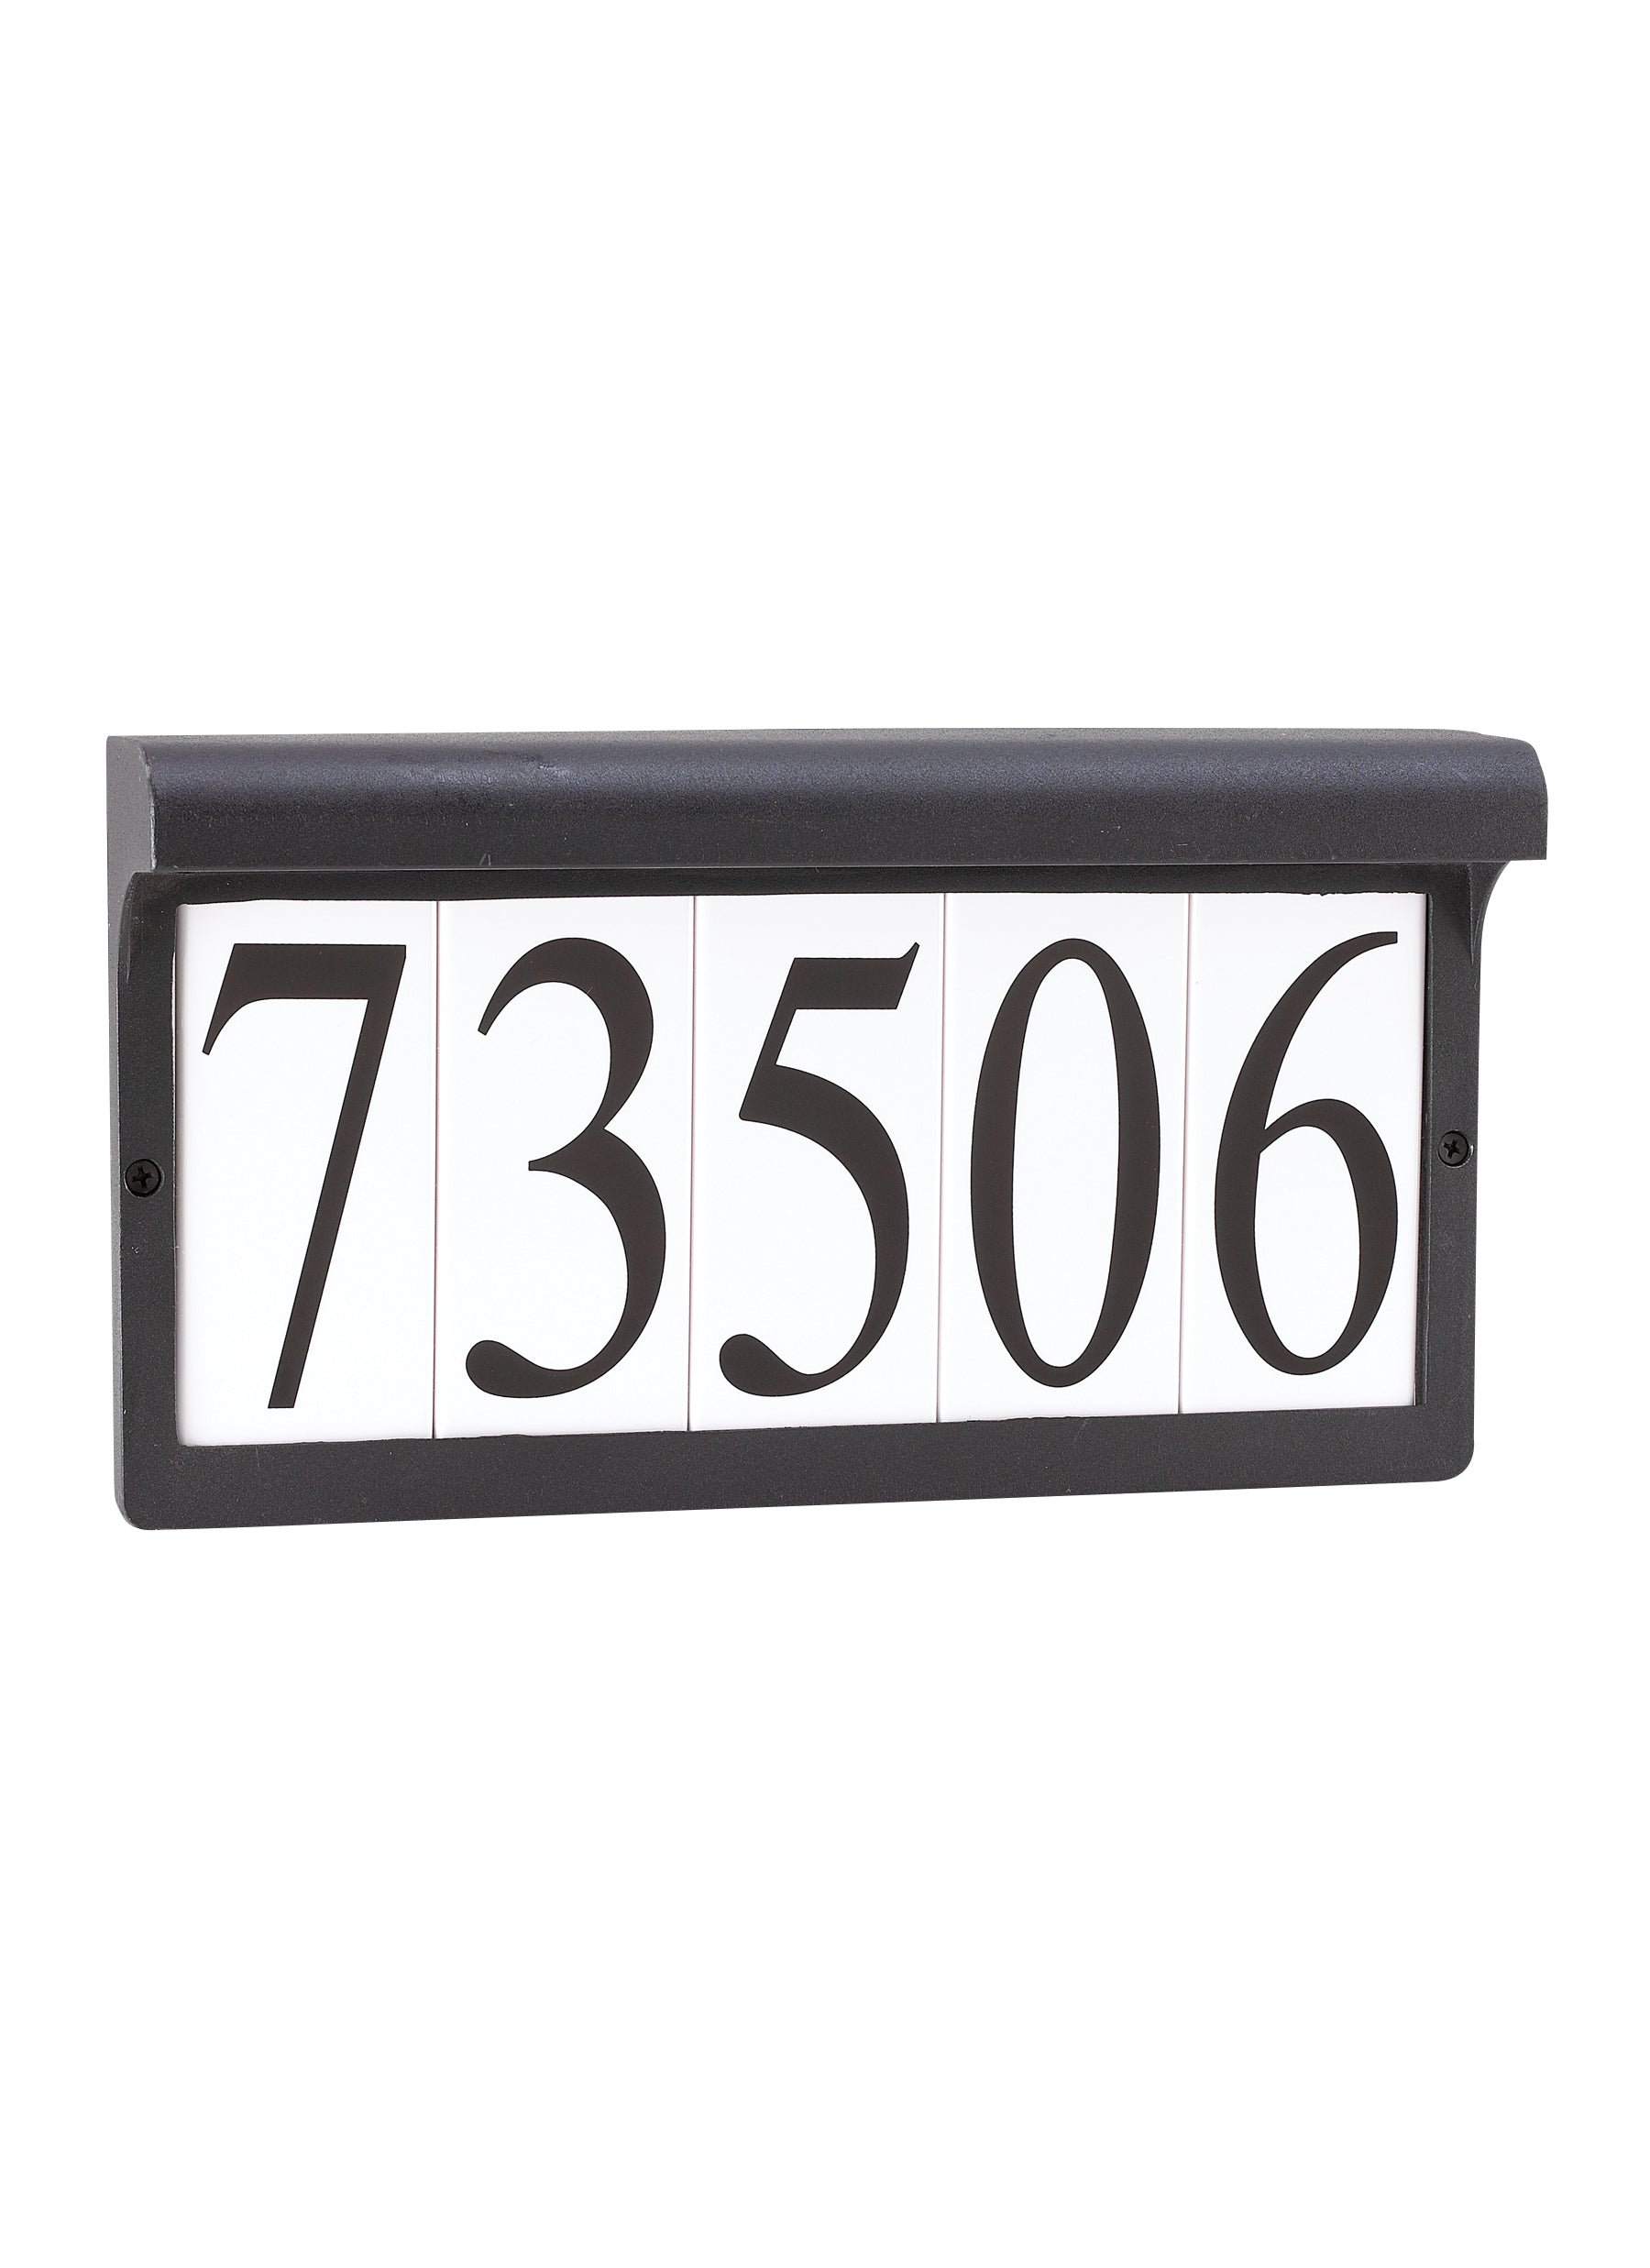 Address light collection traditional black powdercoat aluminum address sign light fixture